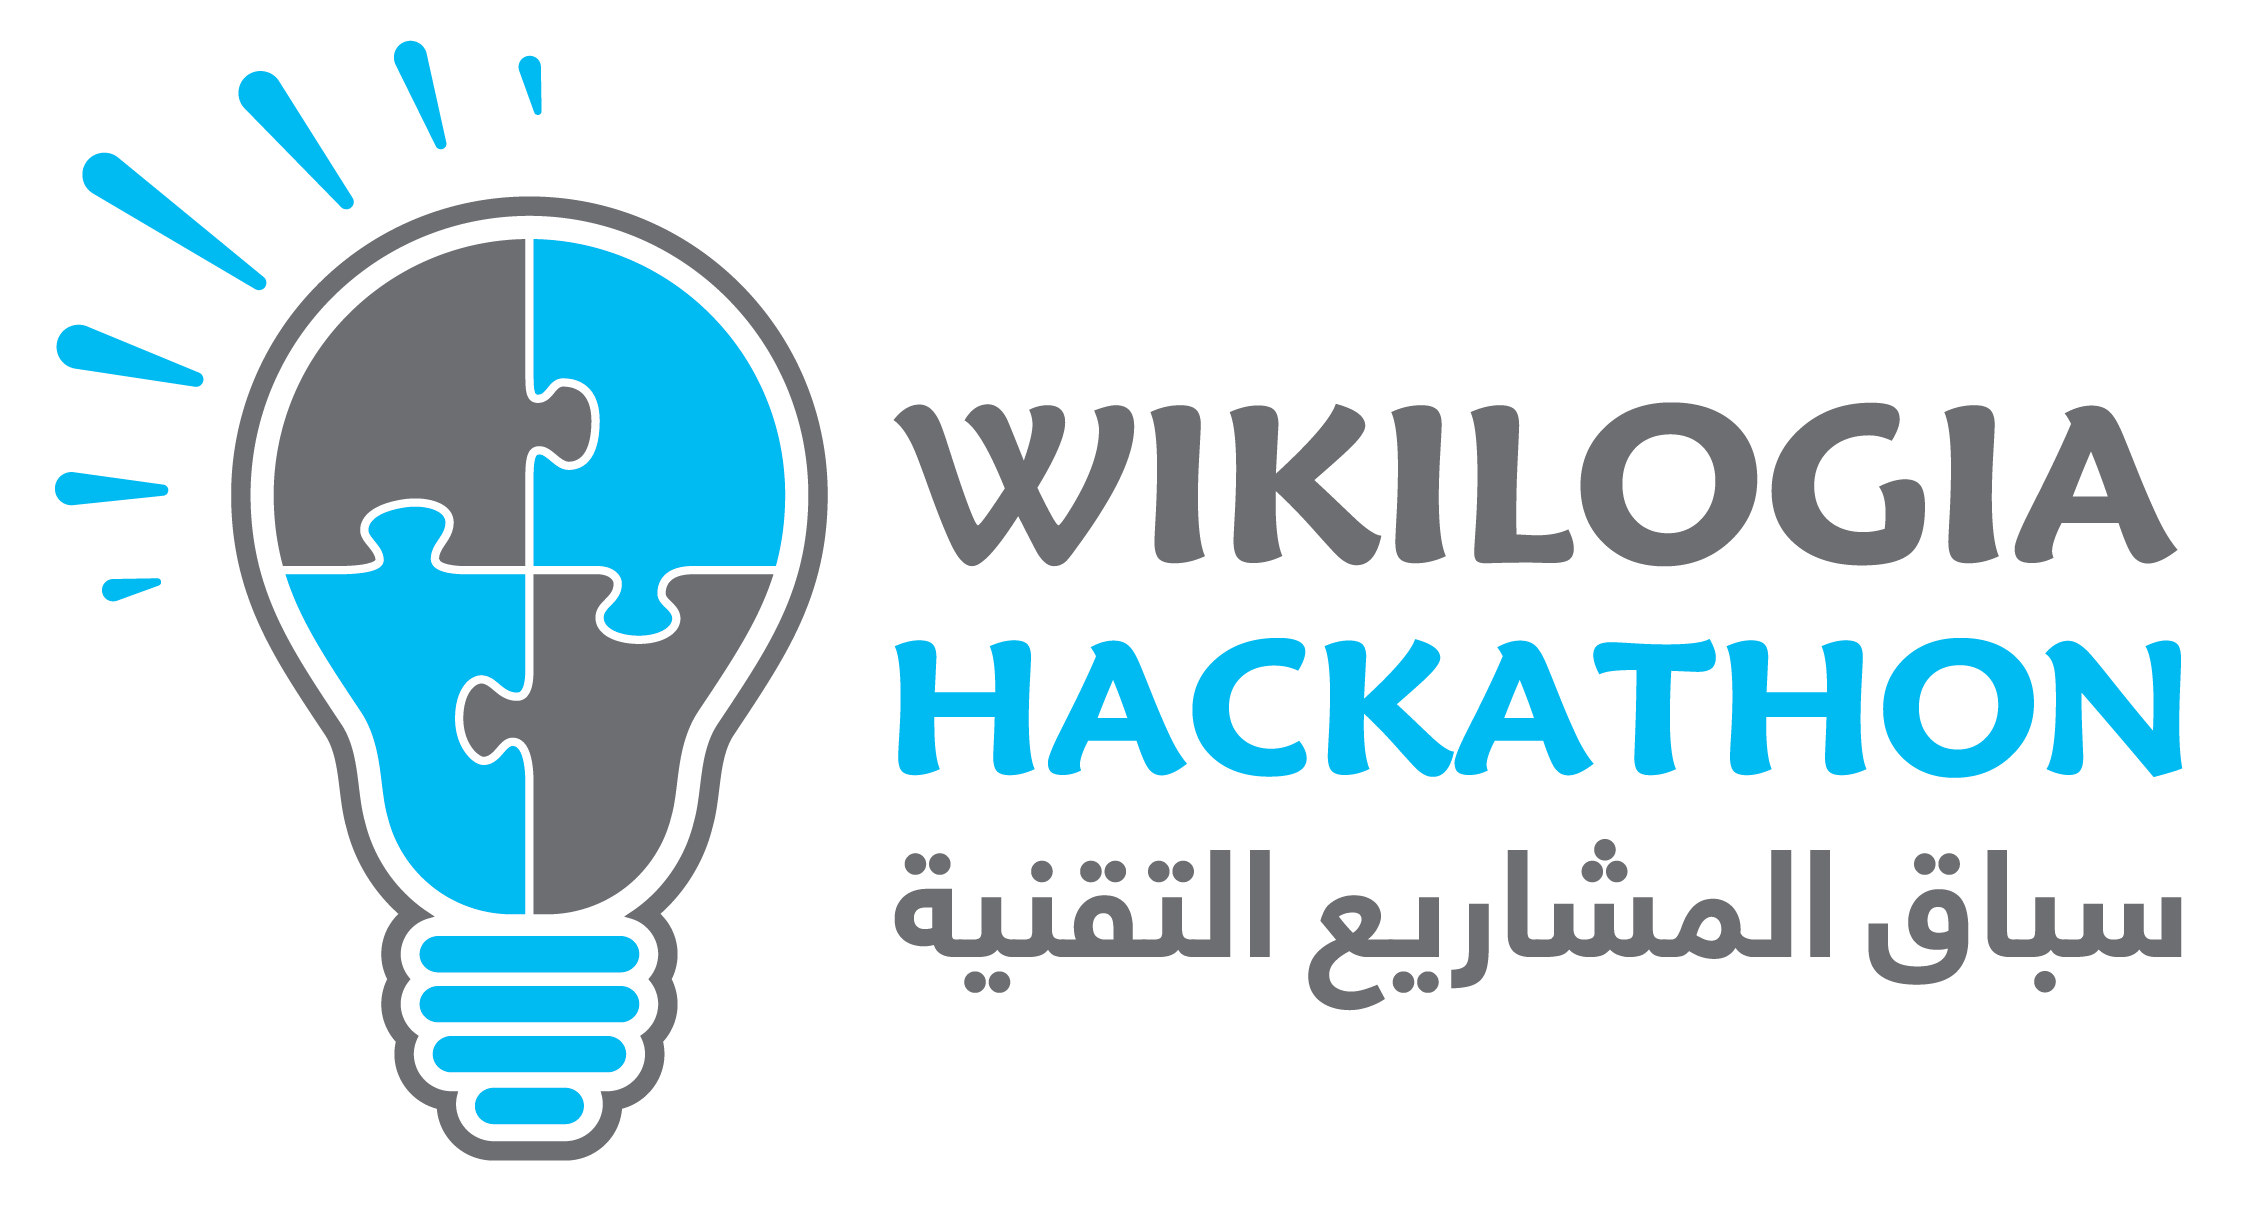 Wikilogia Hackathon